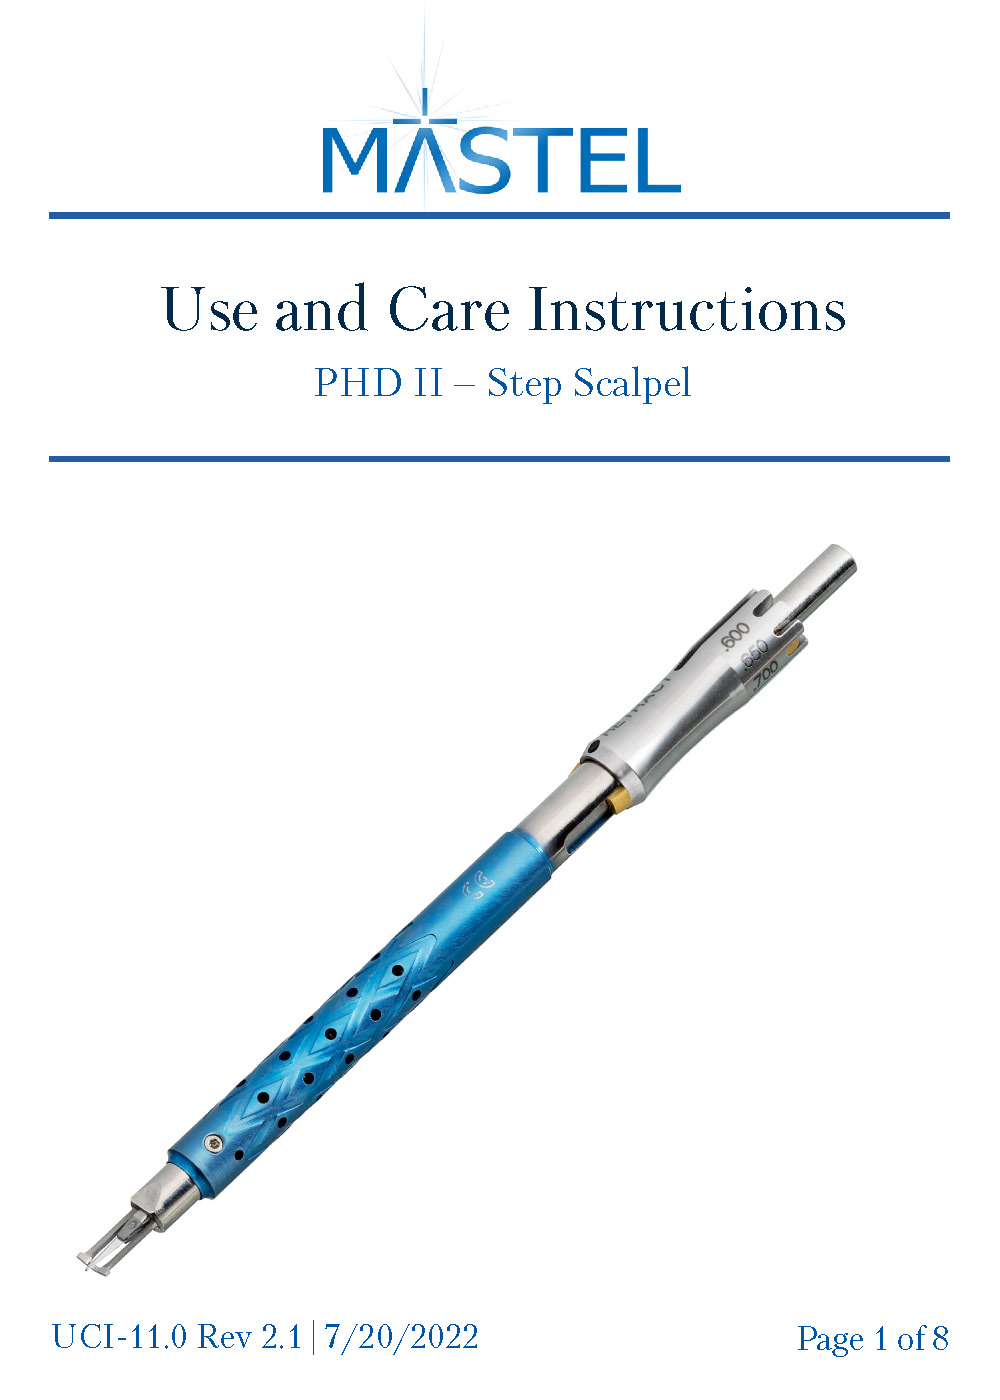 PhD II Step Handle